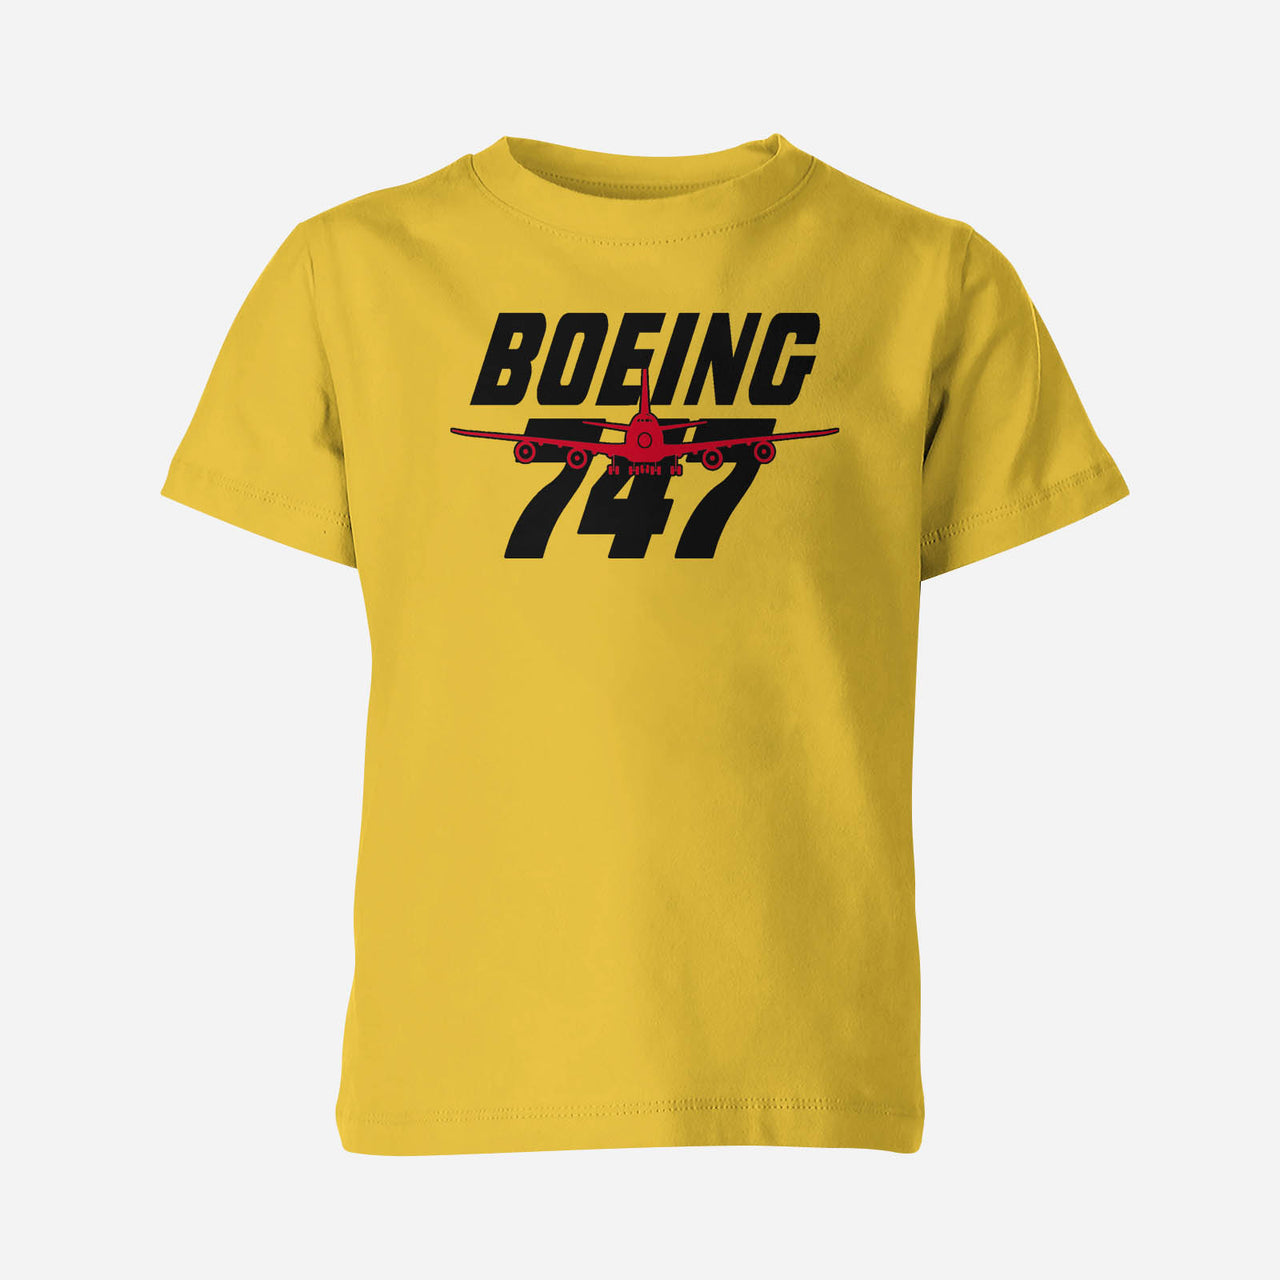 Amazing Boeing 747 Designed Children T-Shirts